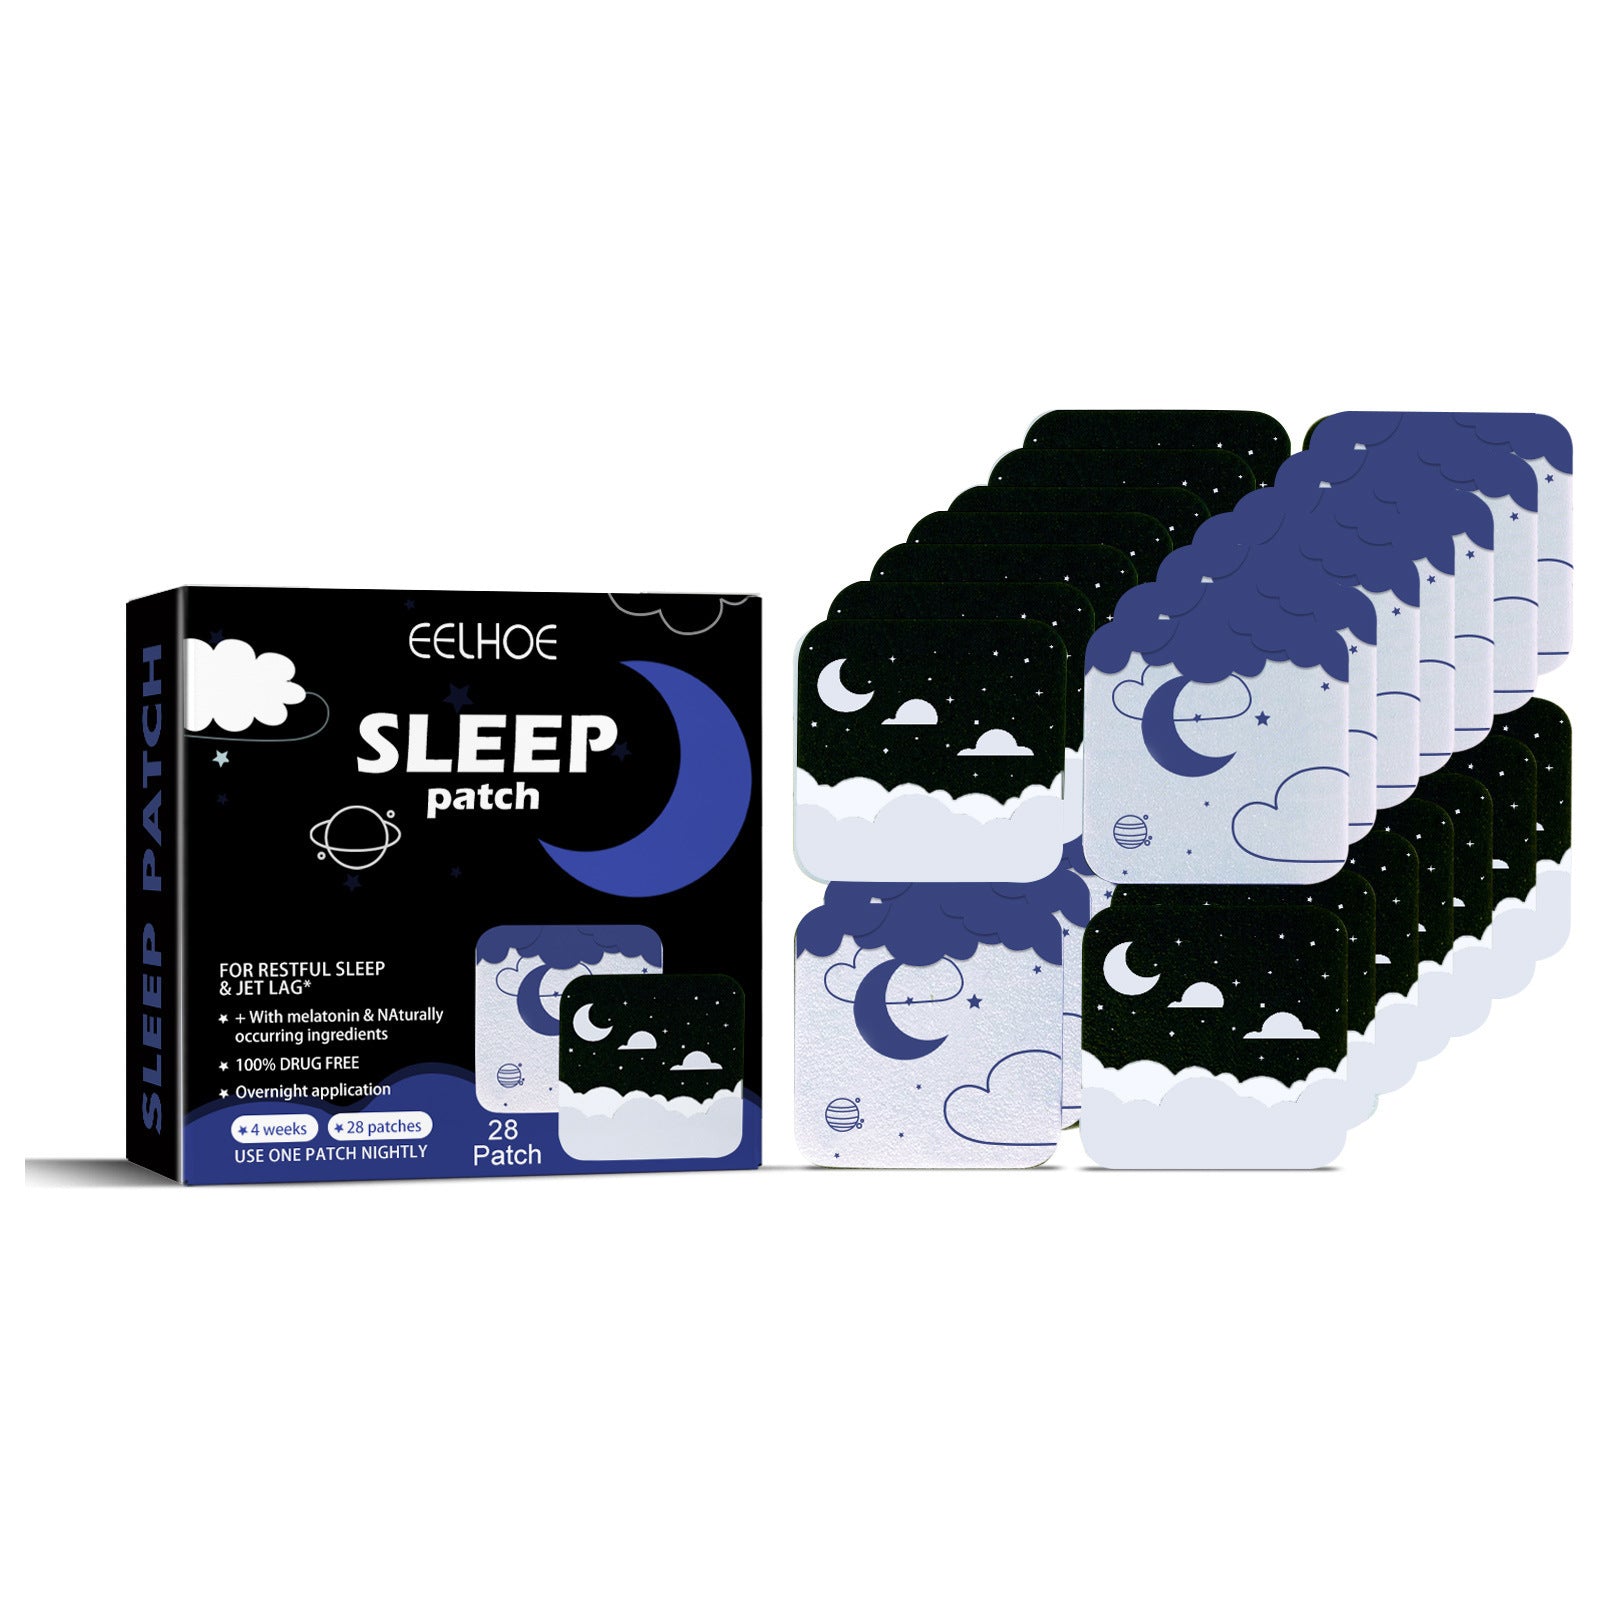 EELHOE Sleep Patch For Improving Sleep And Relax